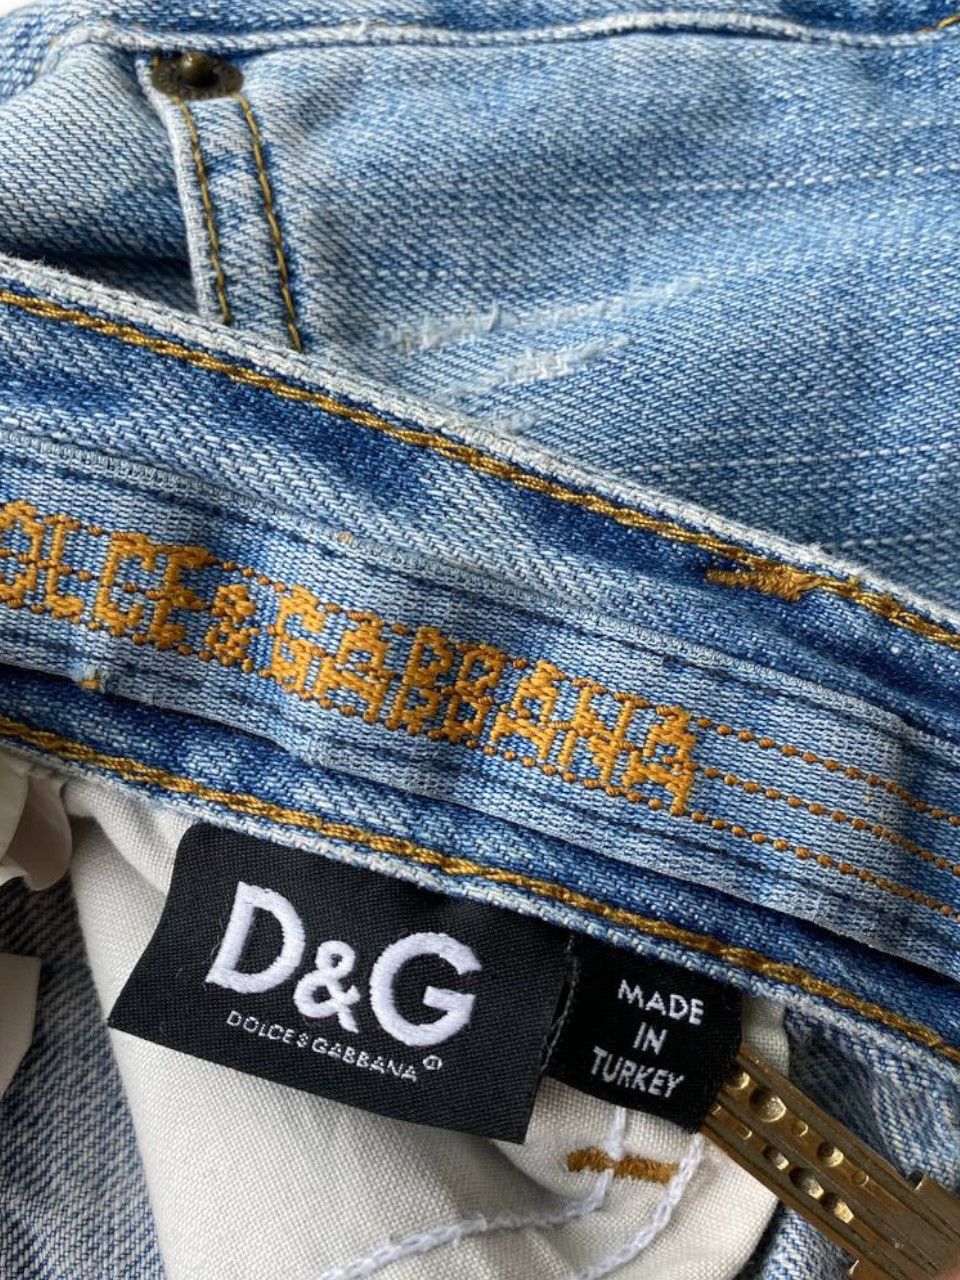 Dolce & Gabbana Dolce & Gabbana Audacious Straight Jeans Denim Pants Size US 36 / EU 52 - 10 Preview